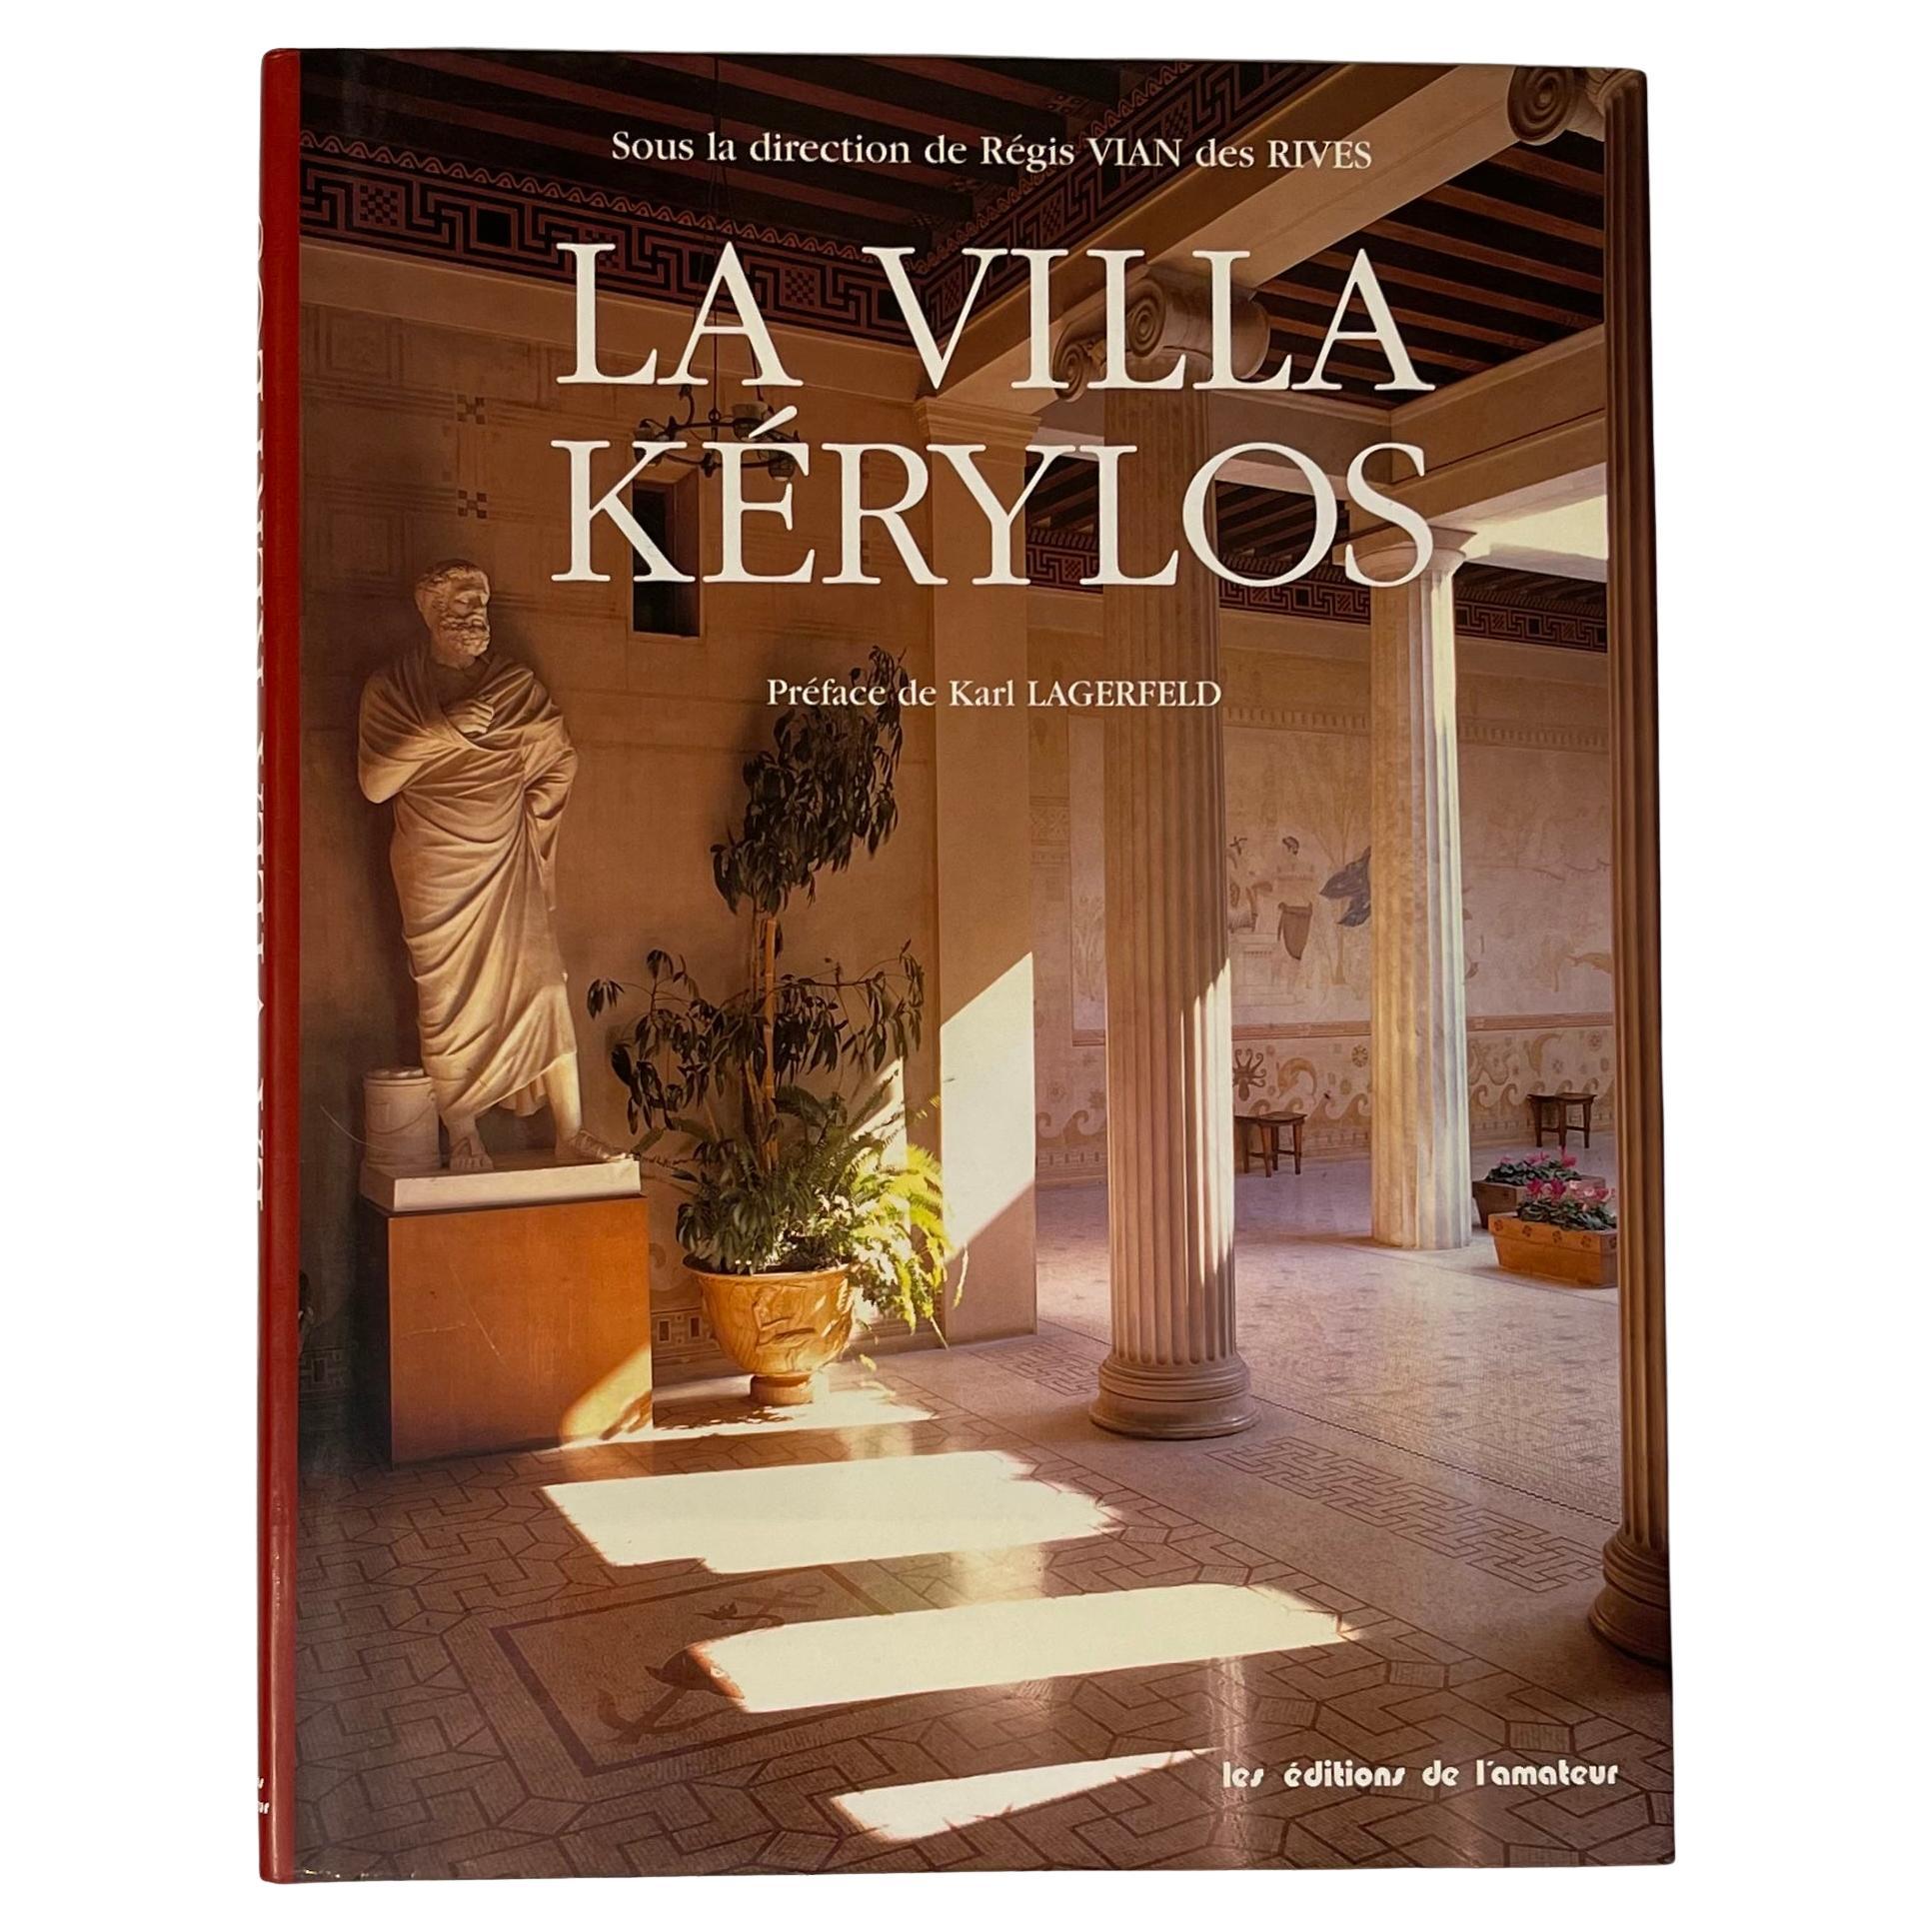 Karl Lagerfeld: „La Villa Kerylos“, Vorwort, 1. Auflage 1997